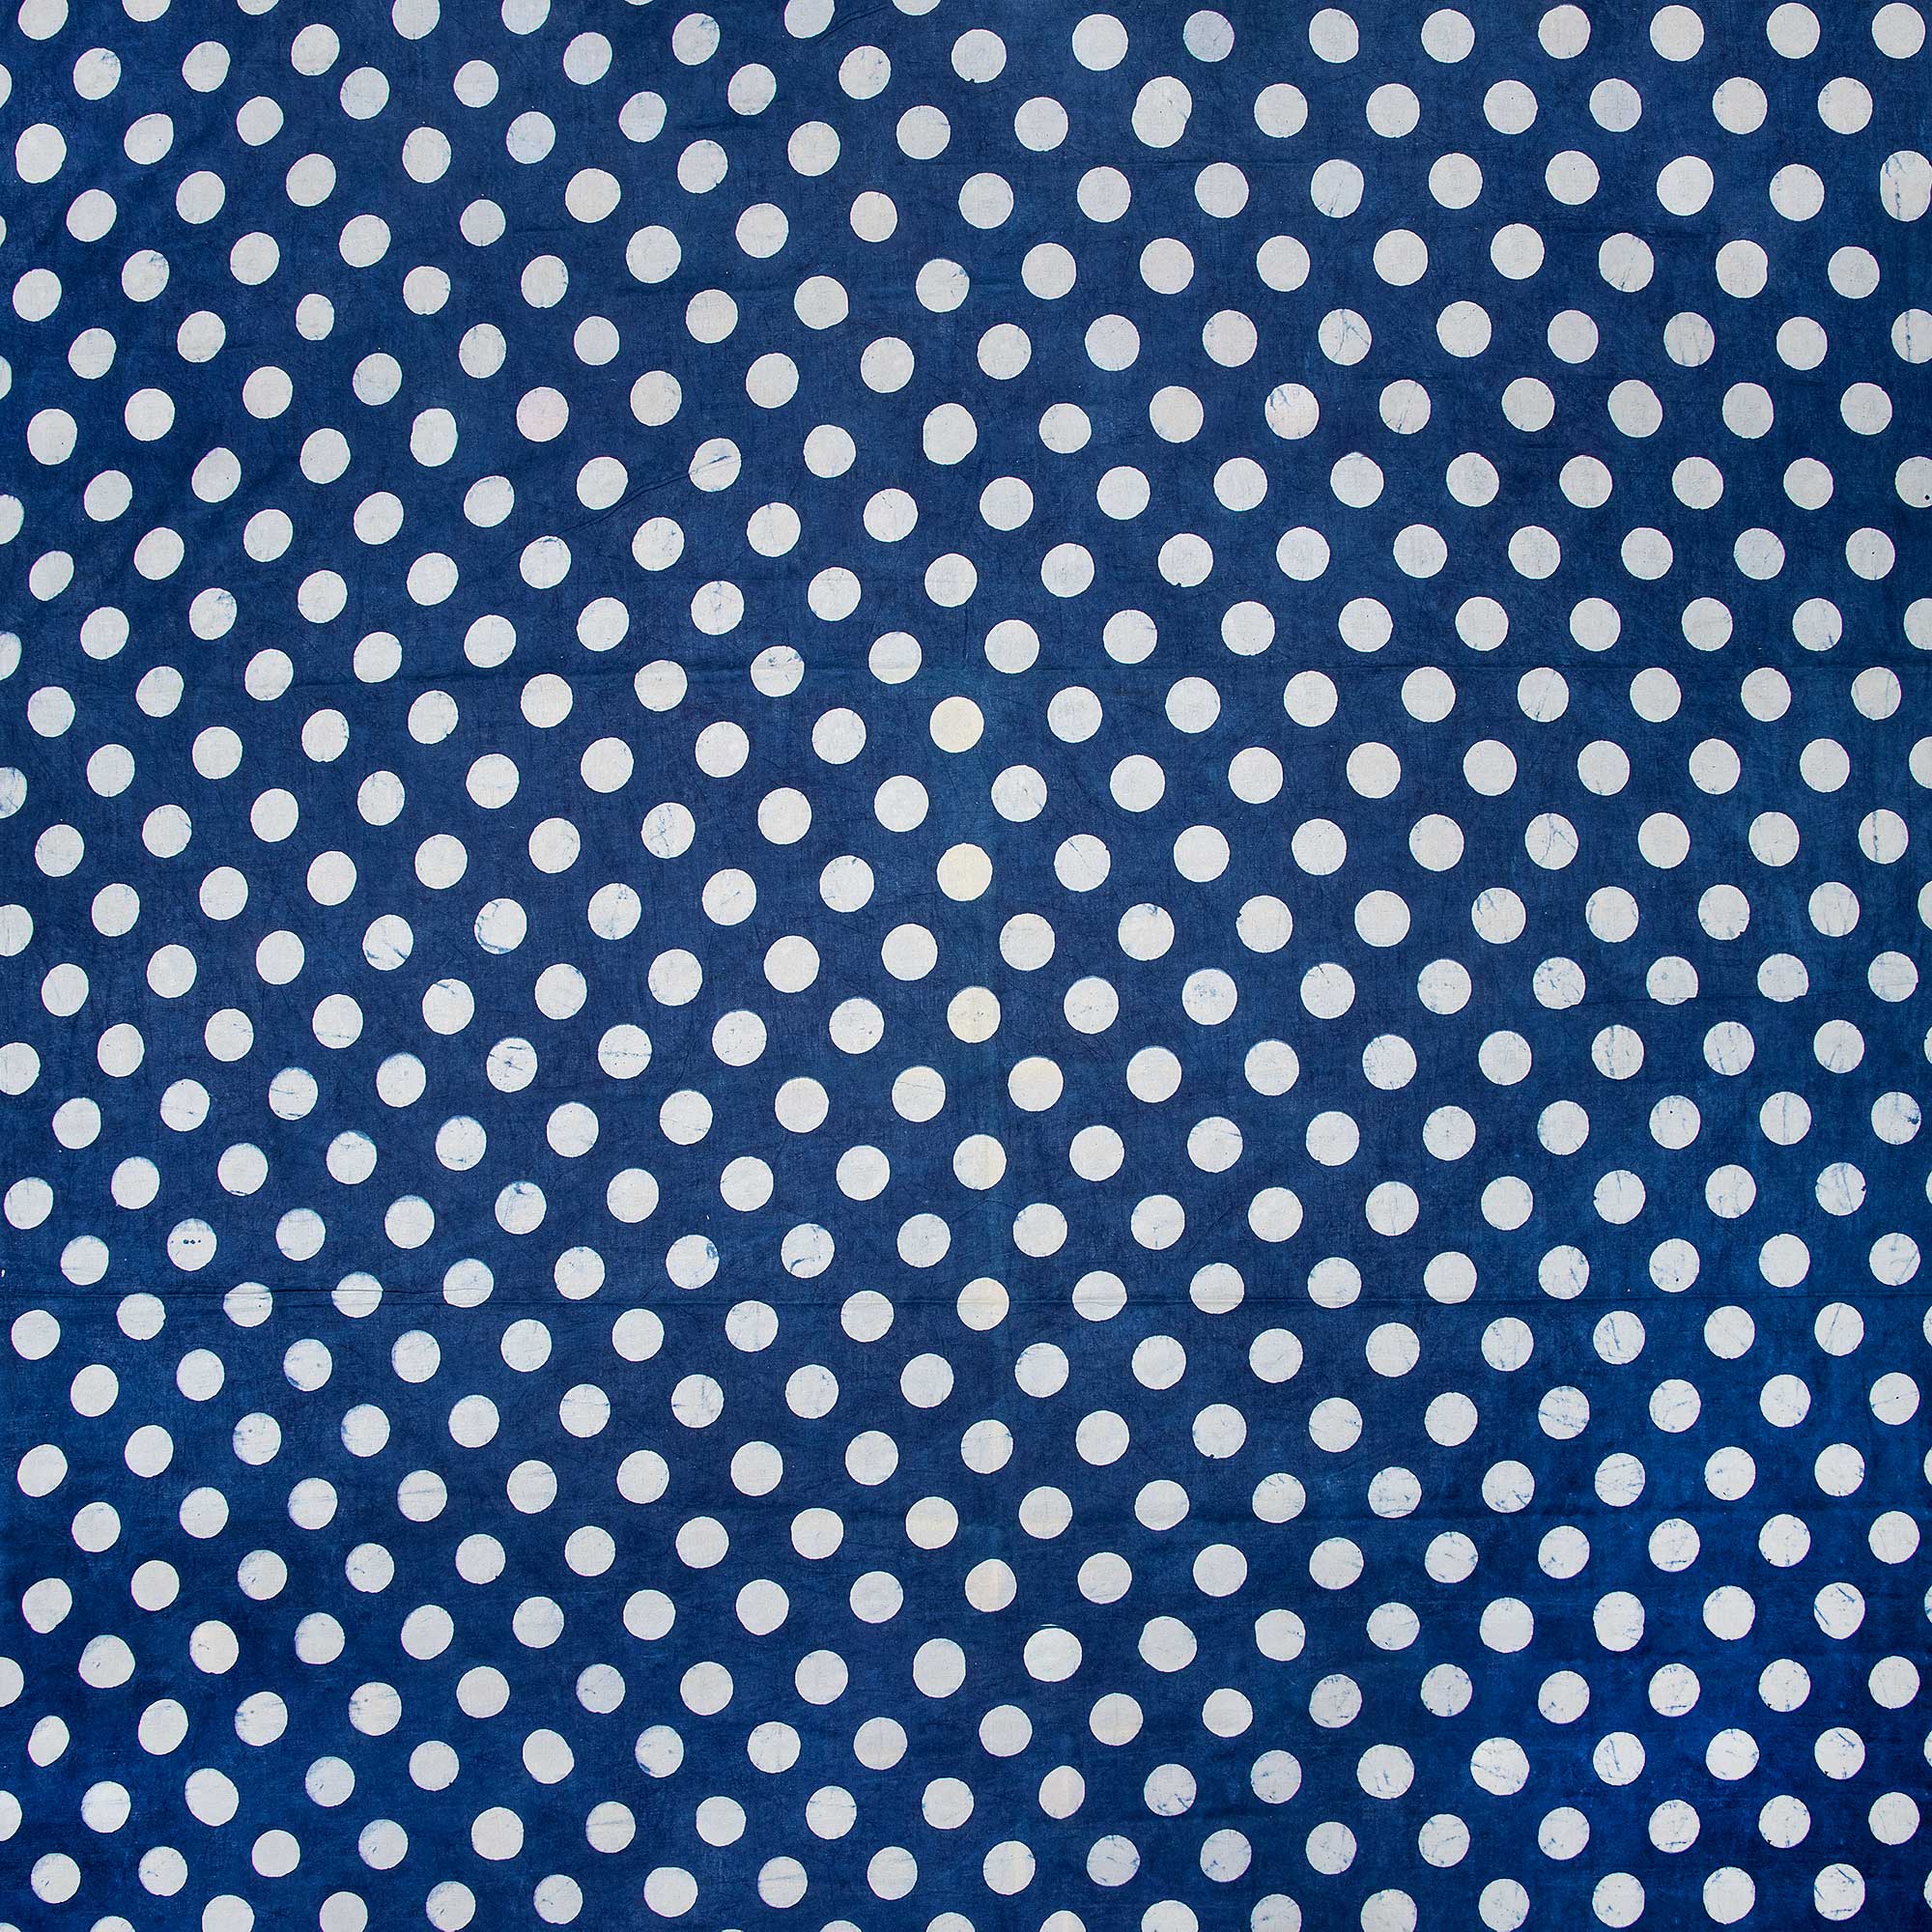 Traditional Indigo Print Polka Dot Fabric